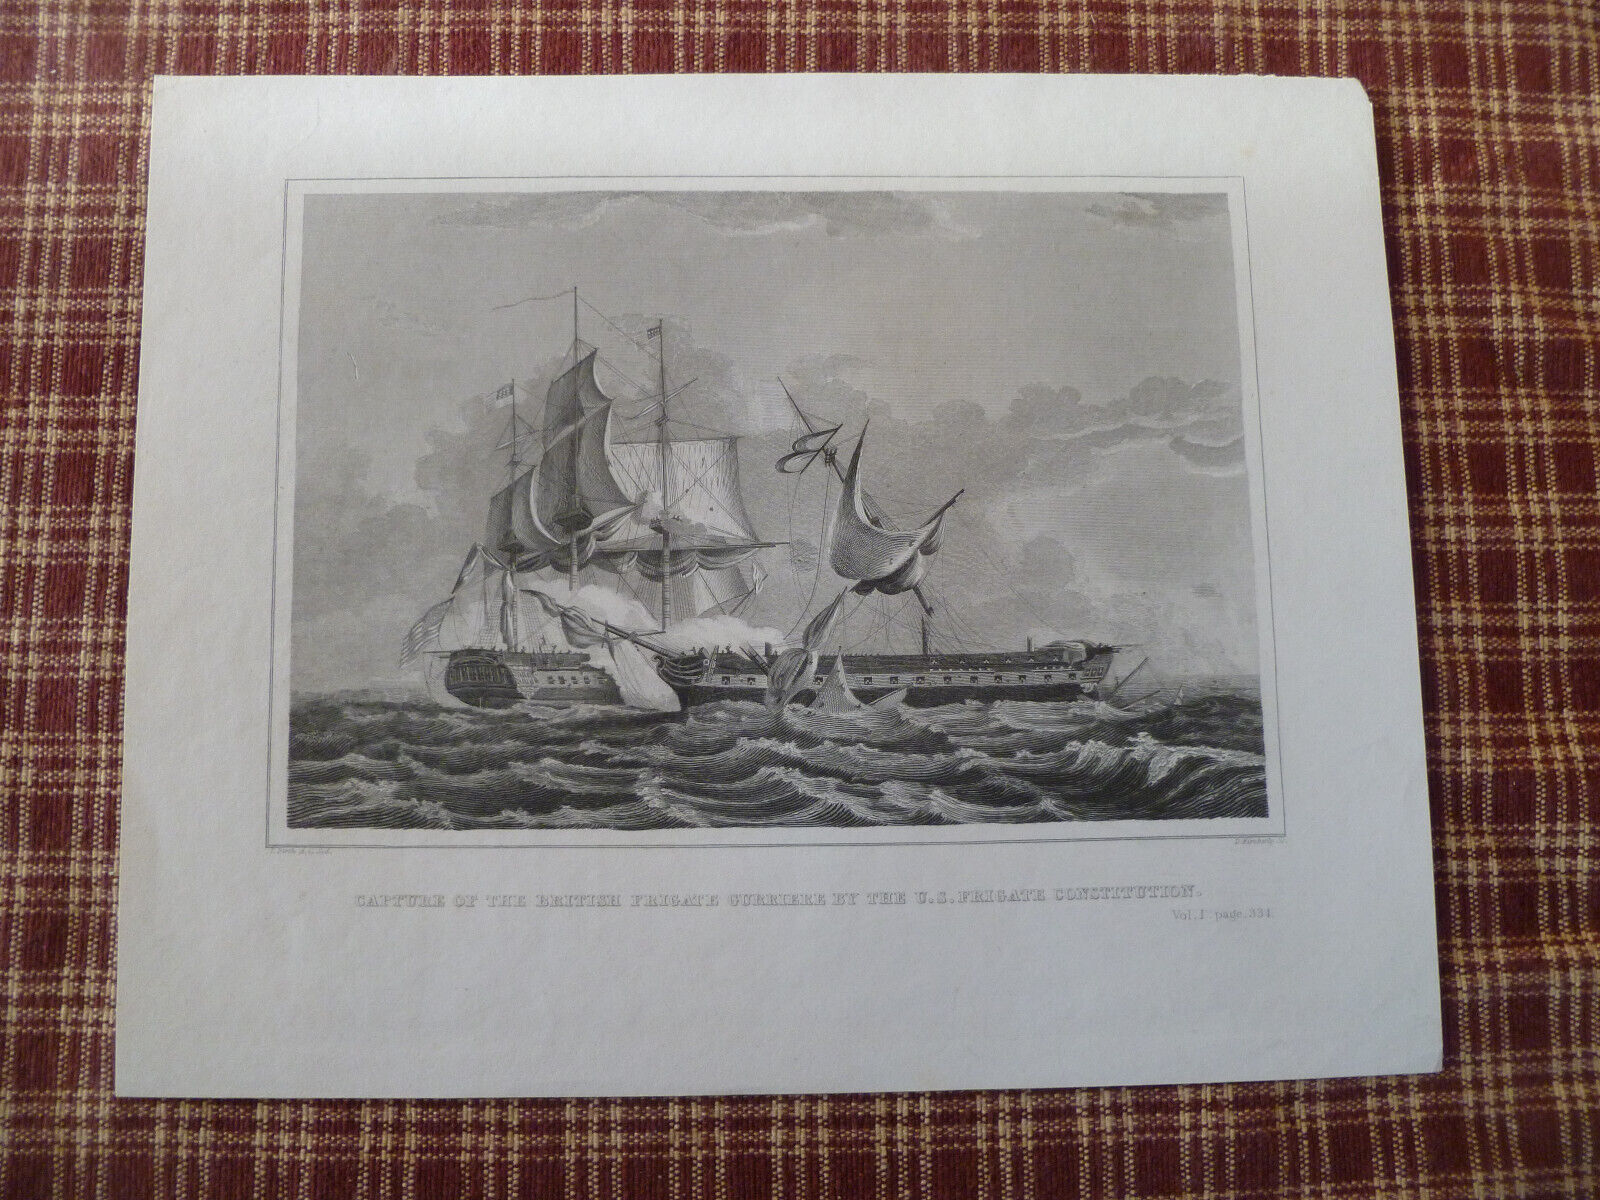 U.S.Frigate Constitution & British Frigate Gurriere-1870 Engraving by T.Birch